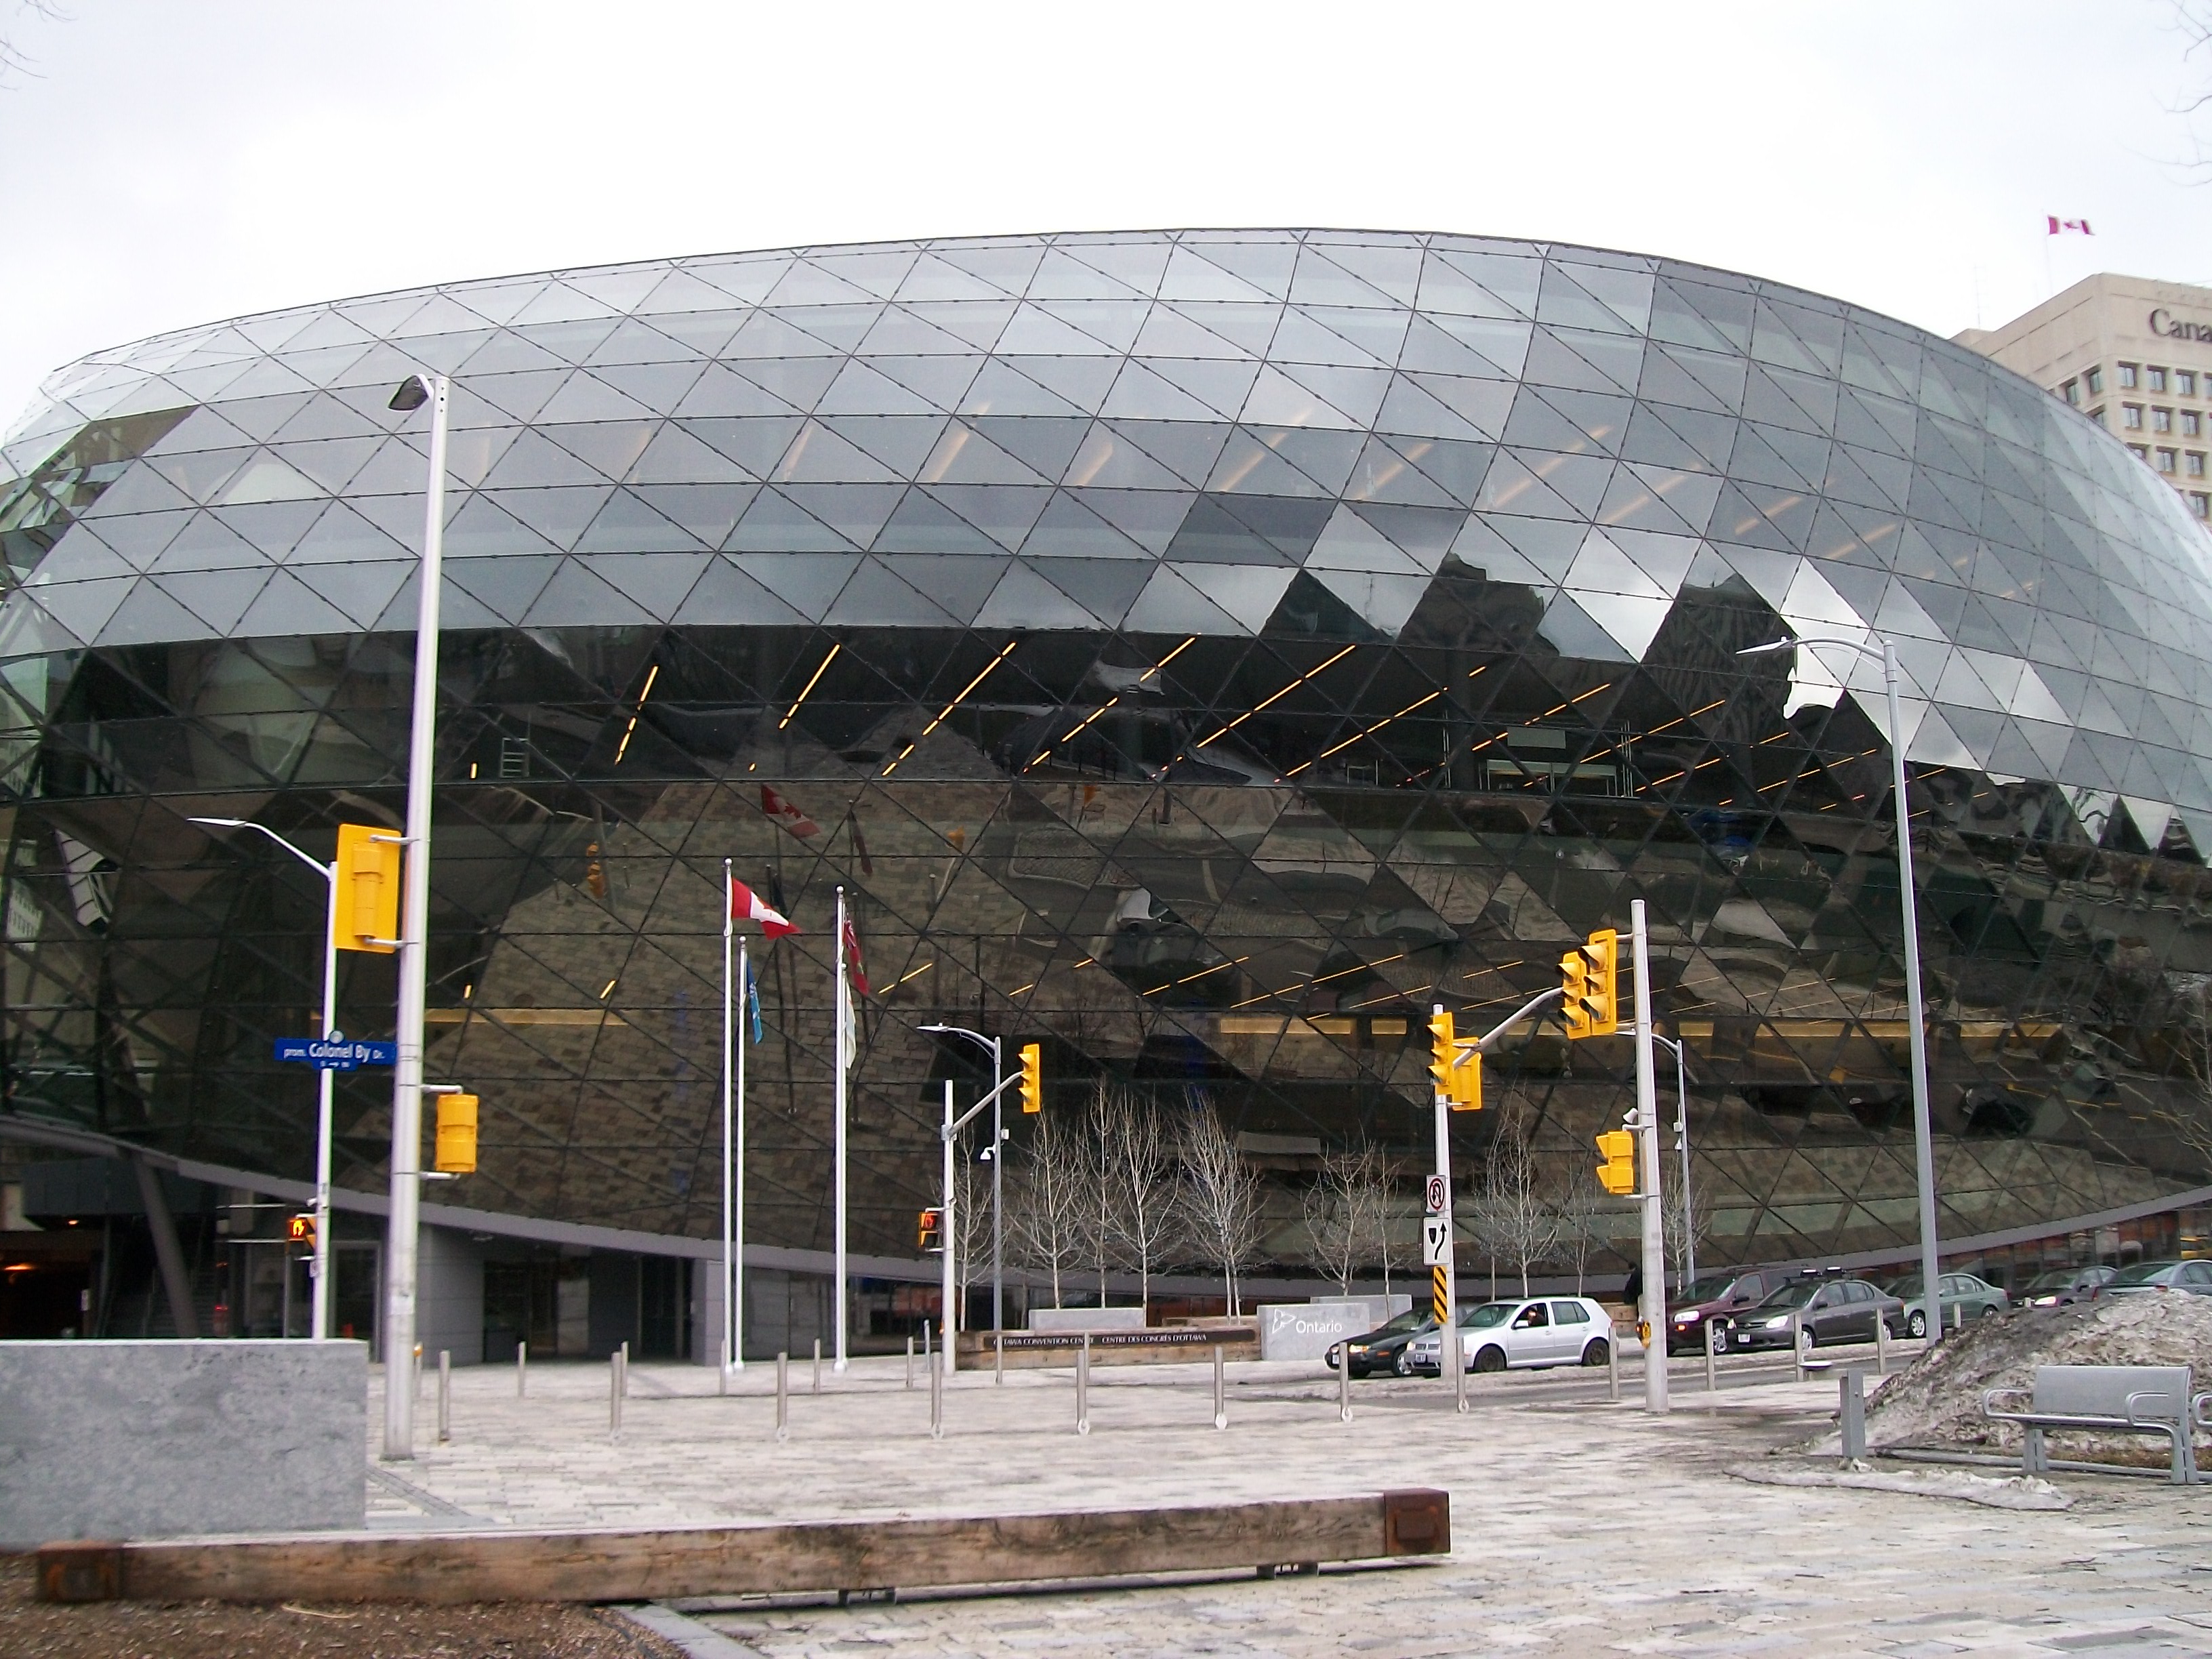 Ottawa Convention Centre – All About Ottawa